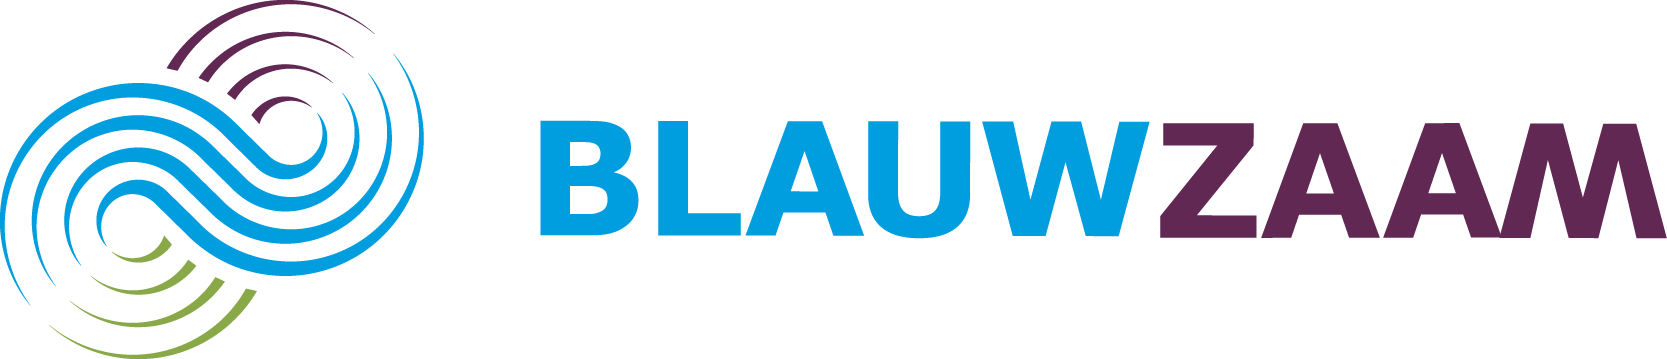 Blauwzaam logo